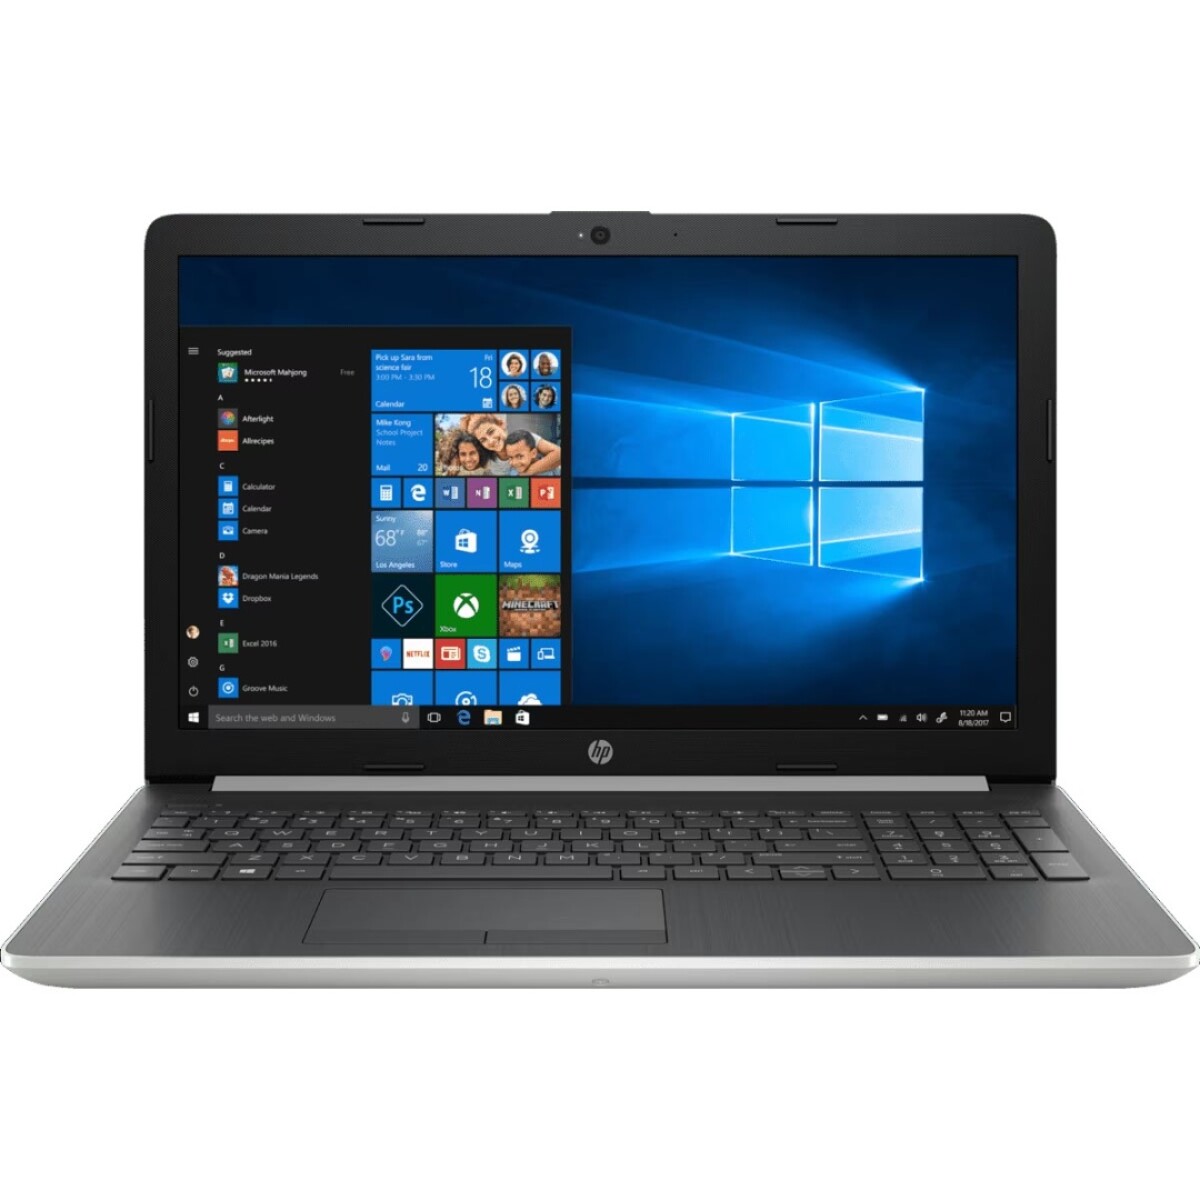 Notebook HP Core I5 3.6GHZ, 8GB, 256GB Ssd, 15.6" Hd, Win 10 - 001 